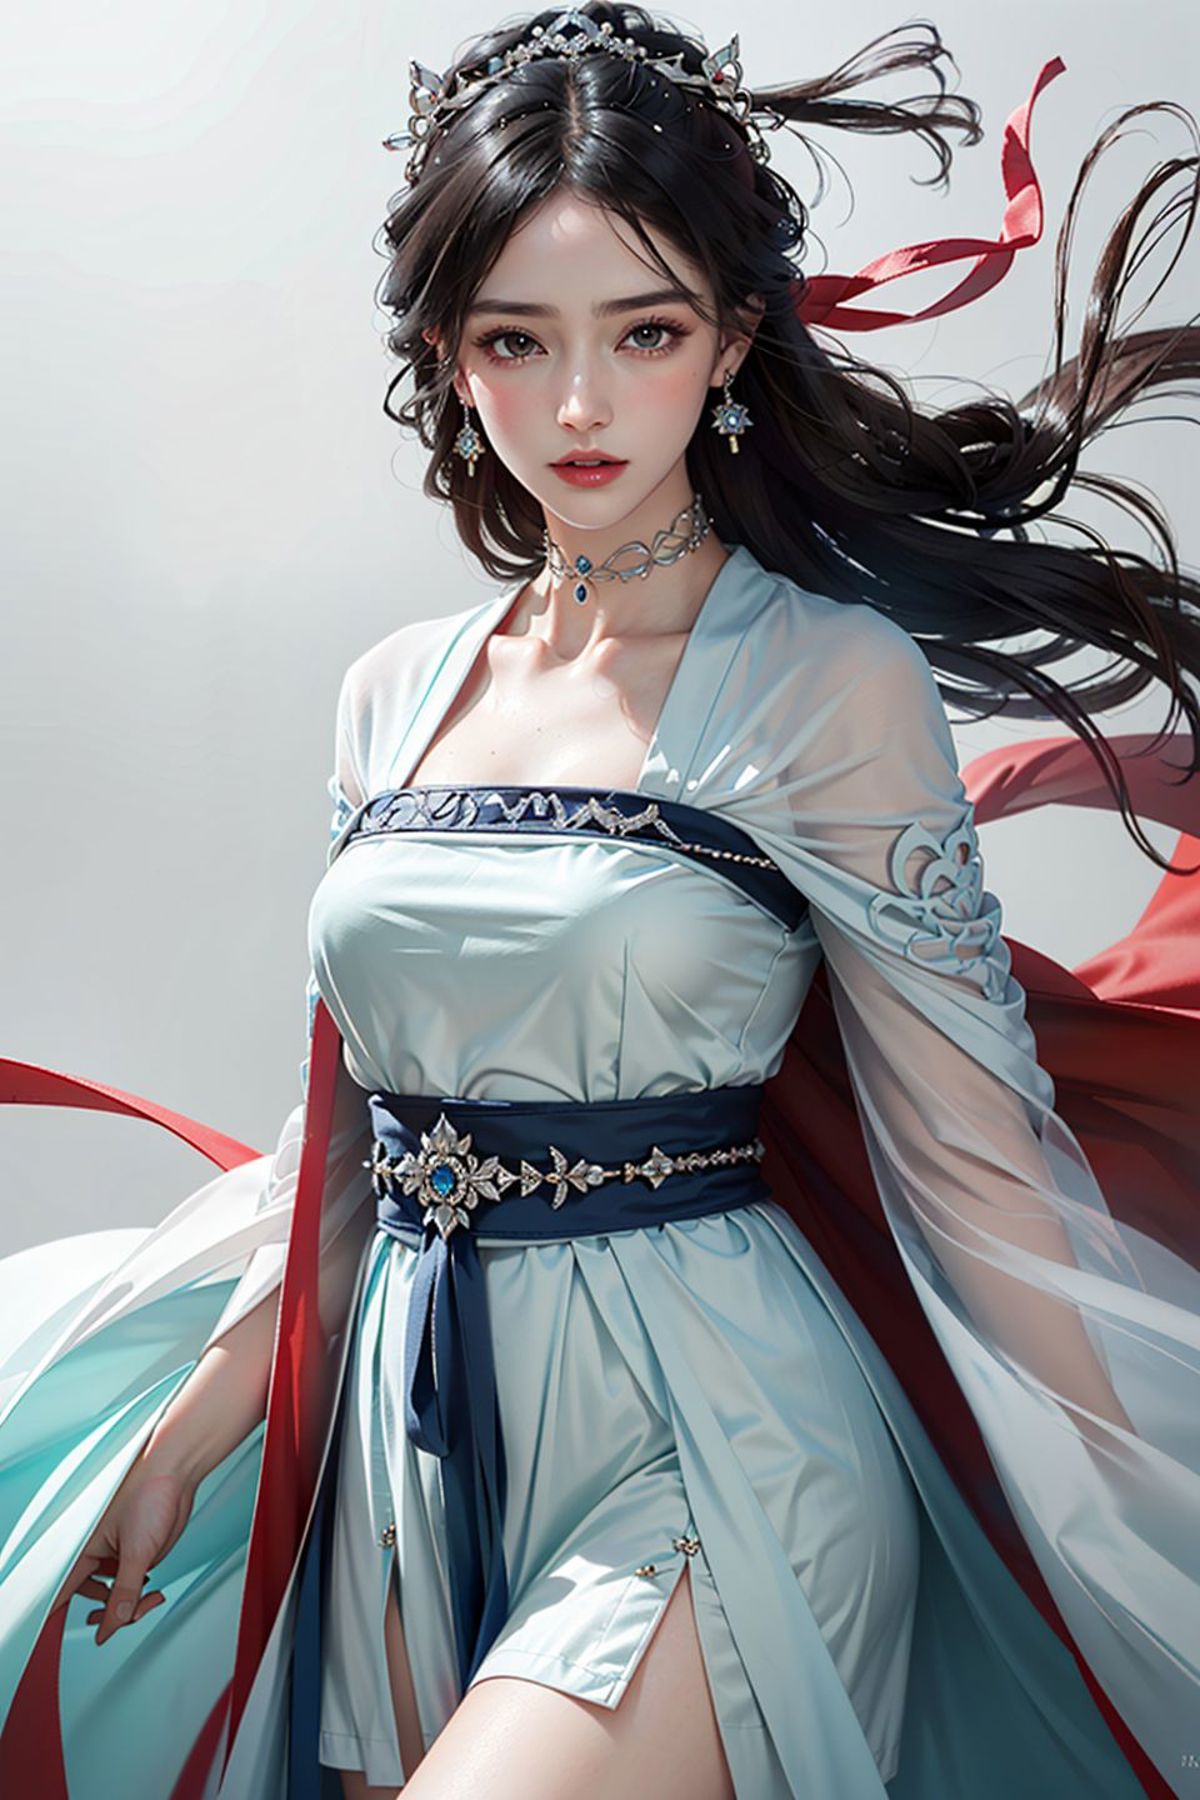 国风汉服 chinese clothes image by ylnnn